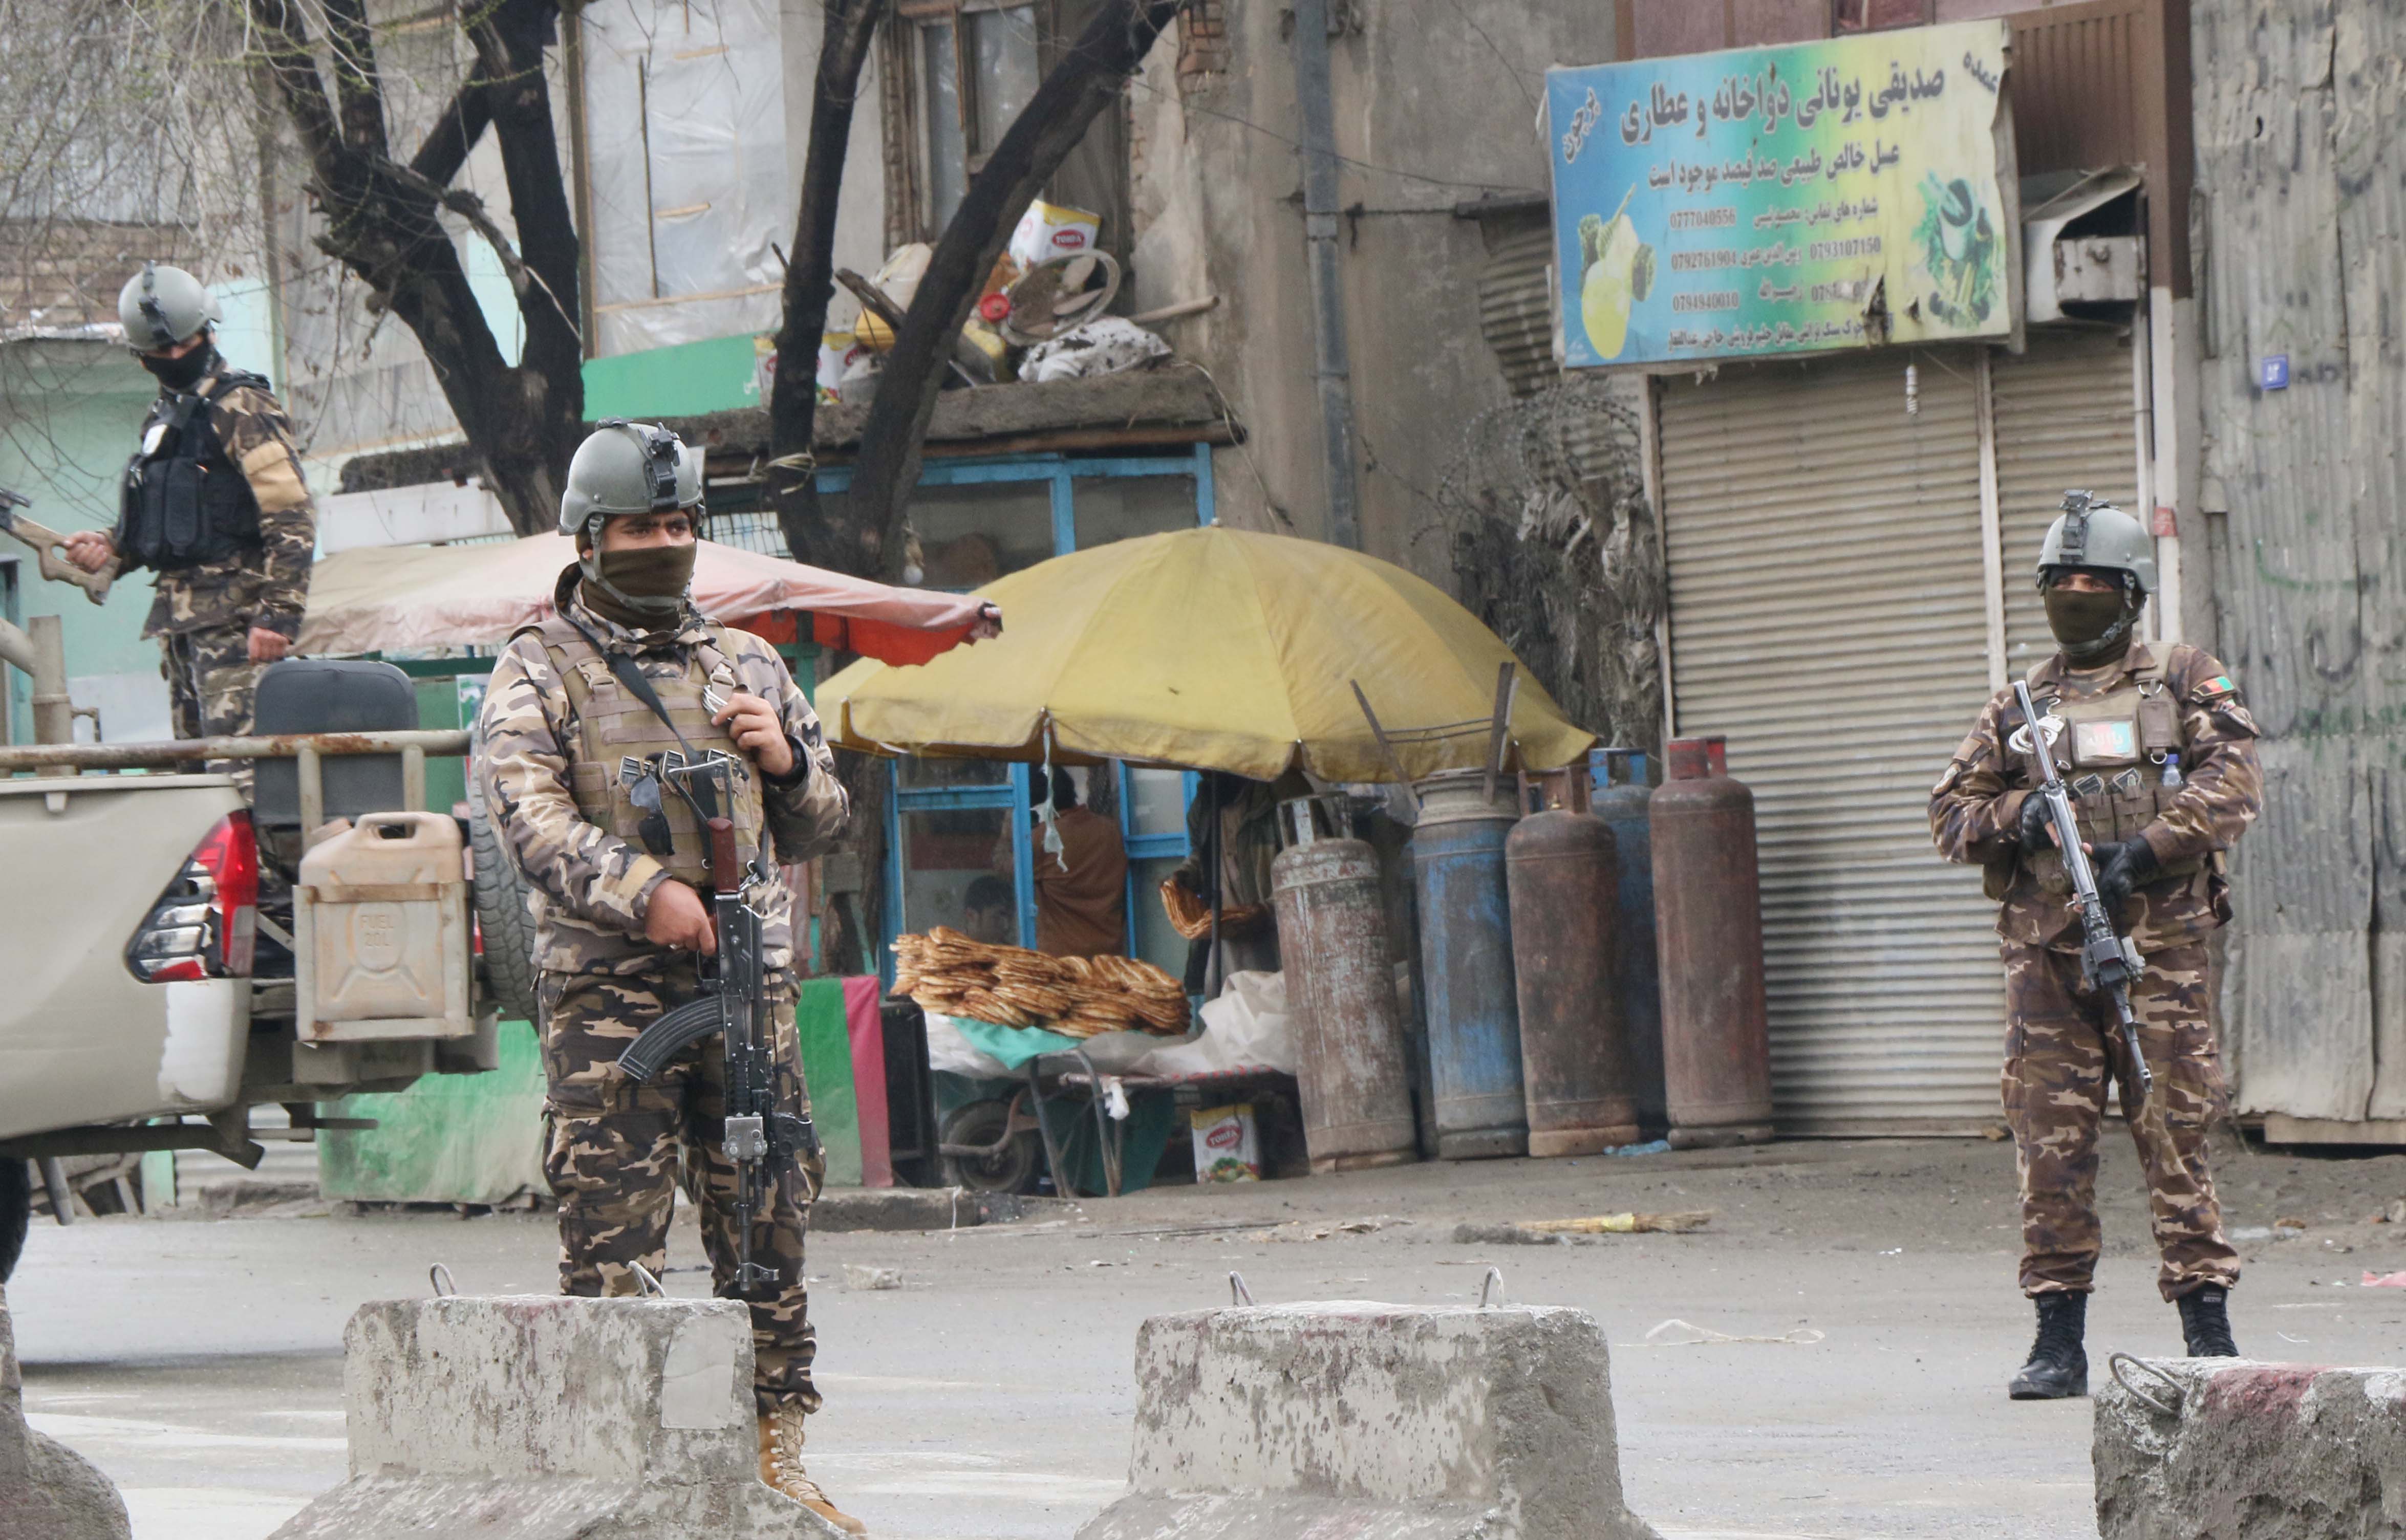 Afghanistan-sec-forces-at-scene-of-attac-on-Gudwara-Kabul-25-3-20-ph-Haroon-Sabawoon-AA.jpg